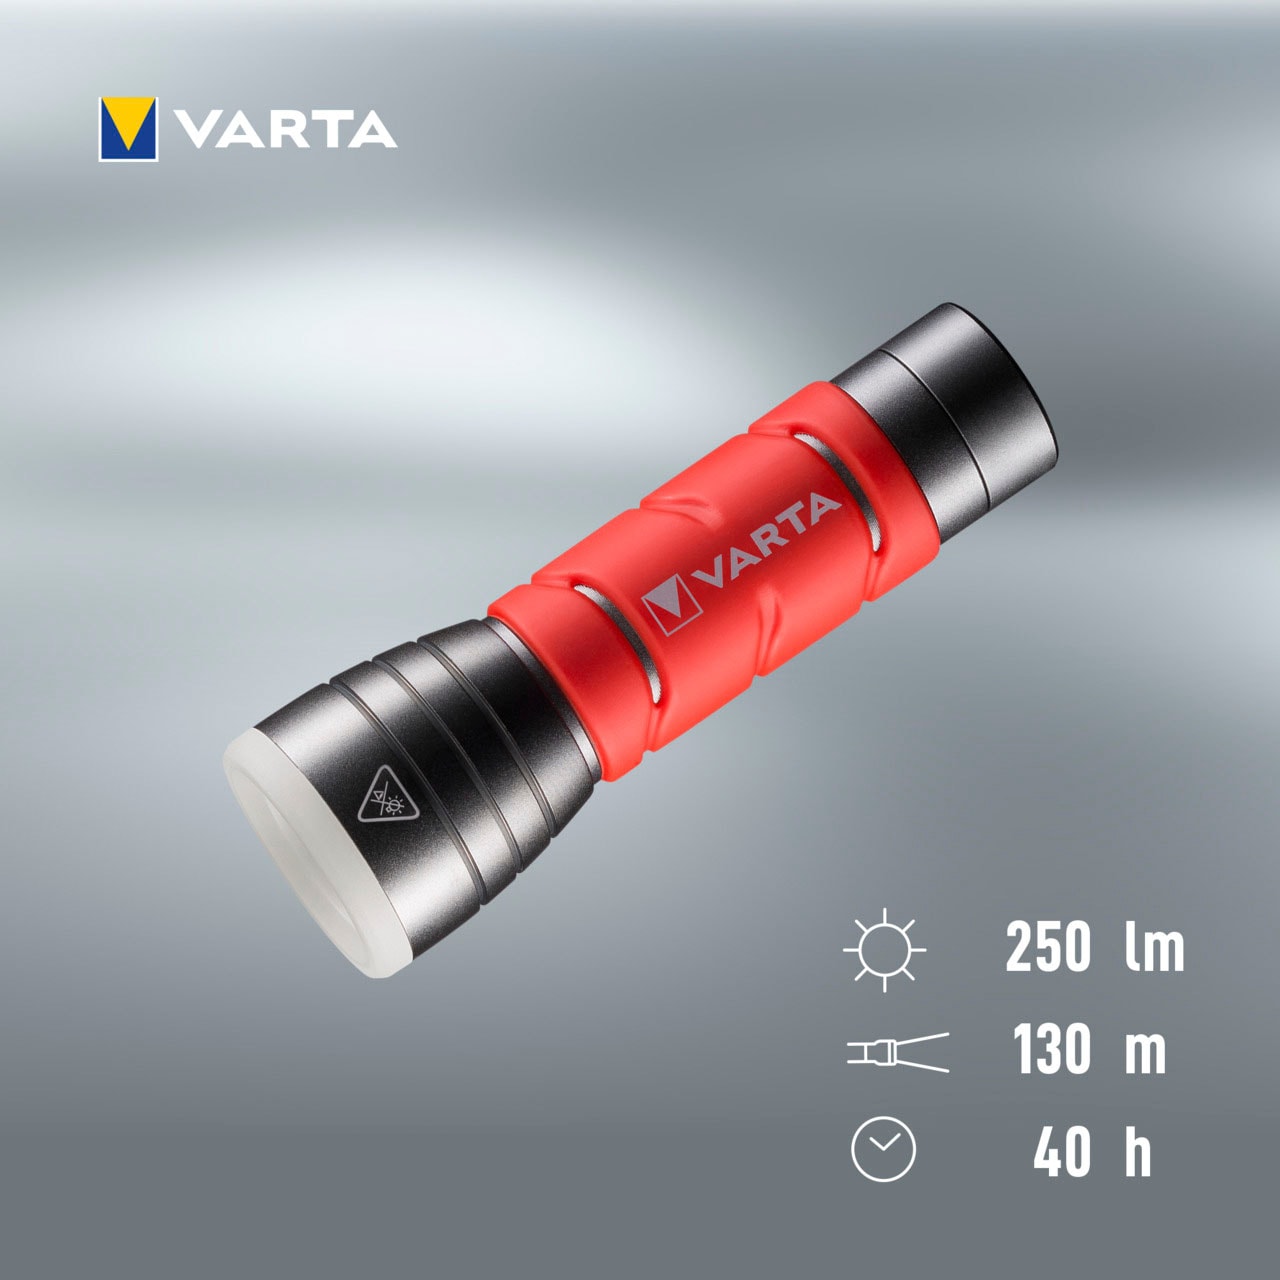 VARTA Taschenlampe »Outdoor Sports F10 Taschenlampe inkl. 3x LONGLIFE Power AAA Batterien«